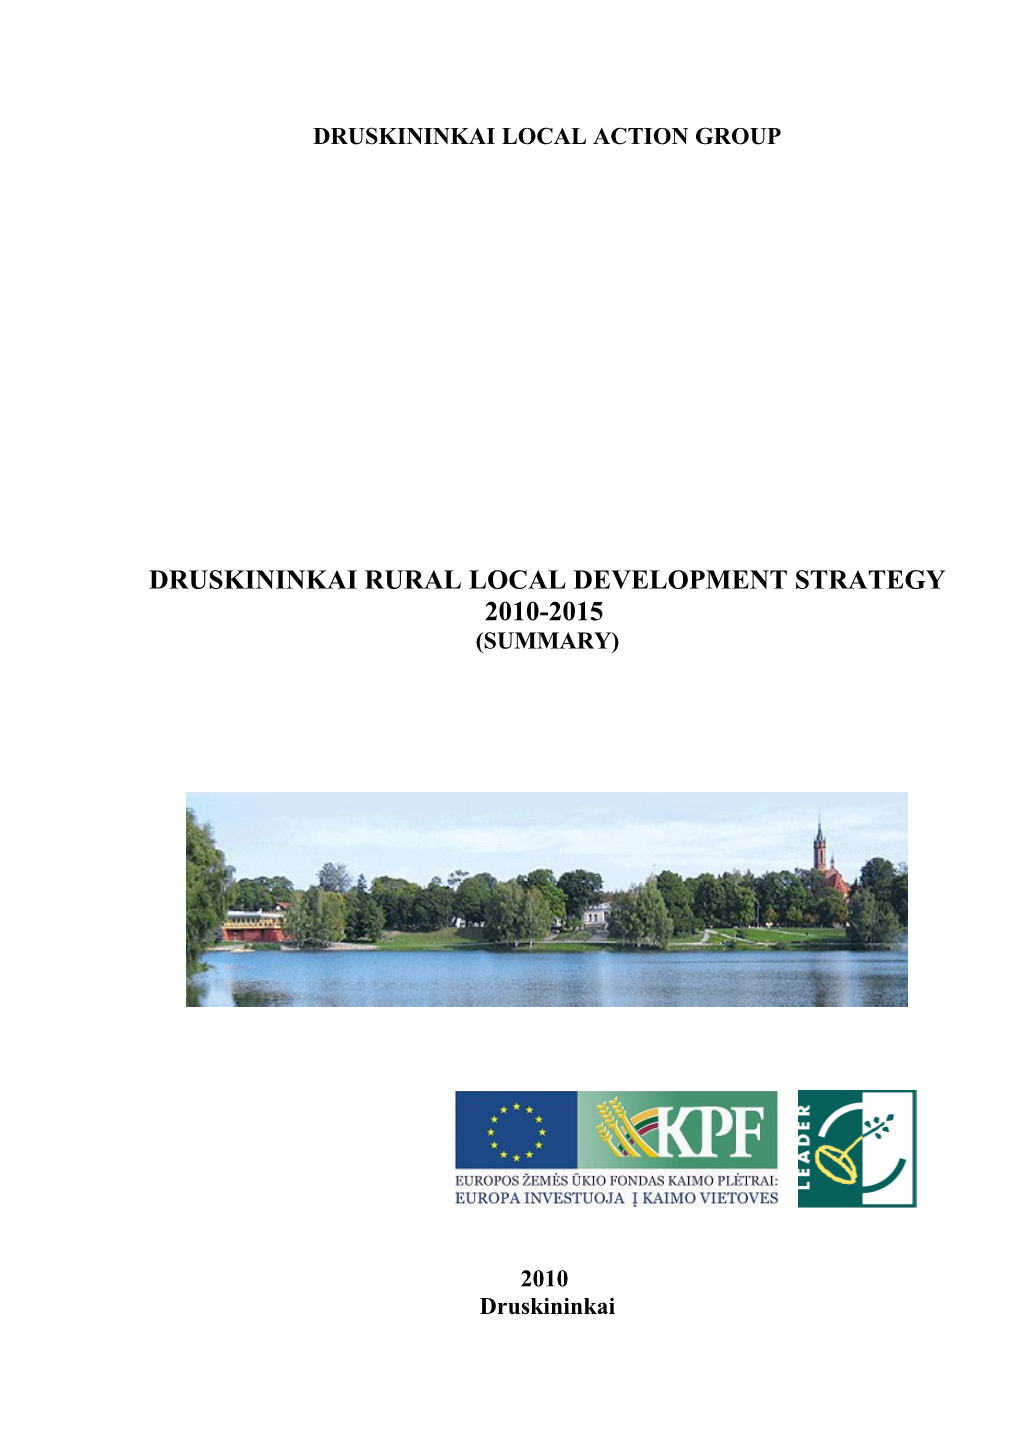 Druskininkairural Local Development Strategy 2010-2015